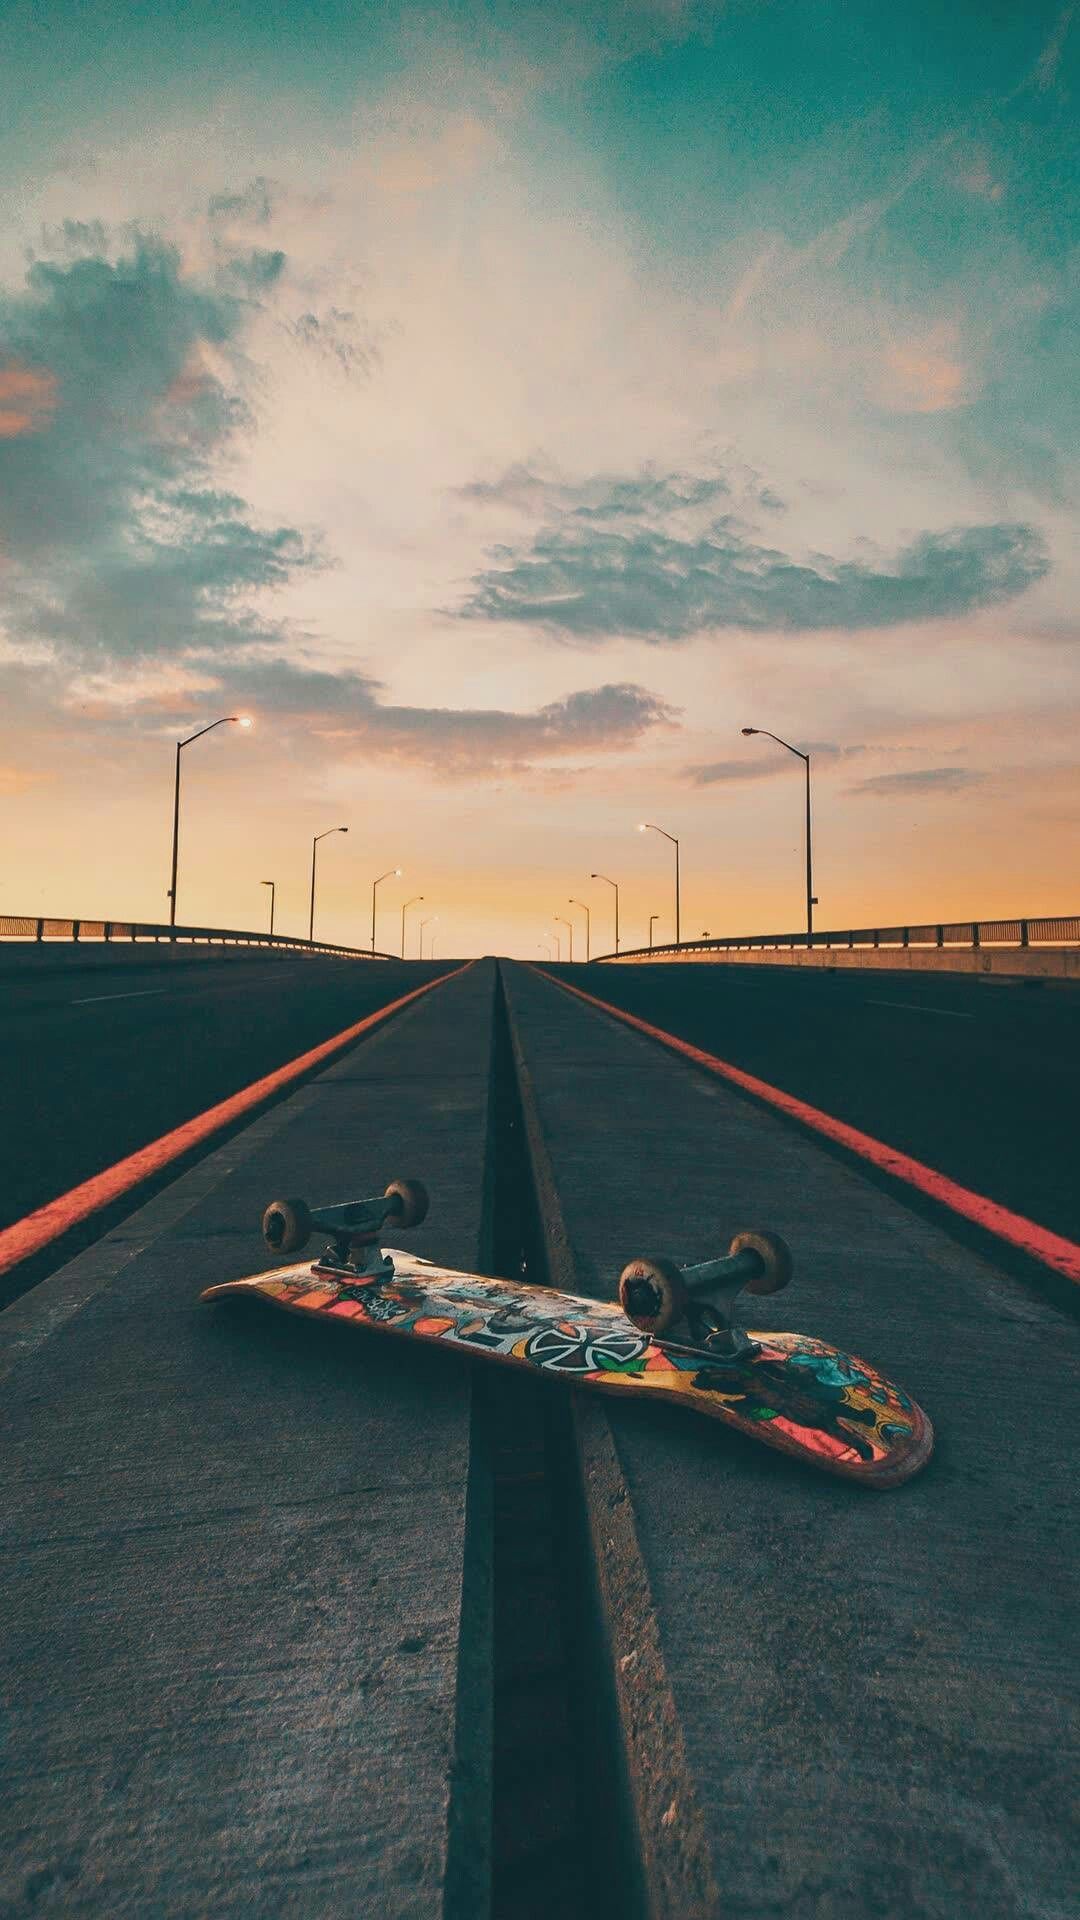 iPhone wallpaper. Skateboard photography